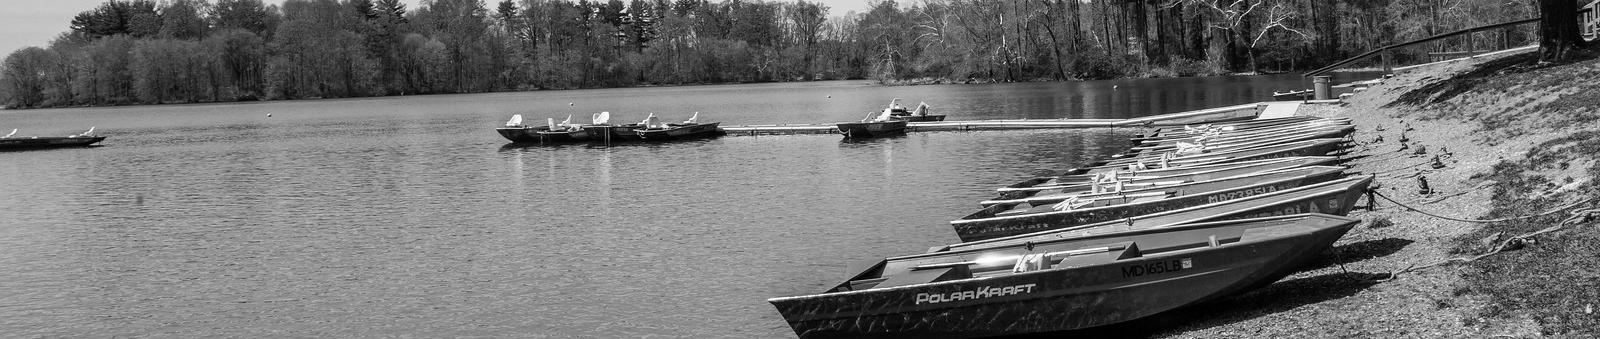 Rental boats at loch raven reservoir.